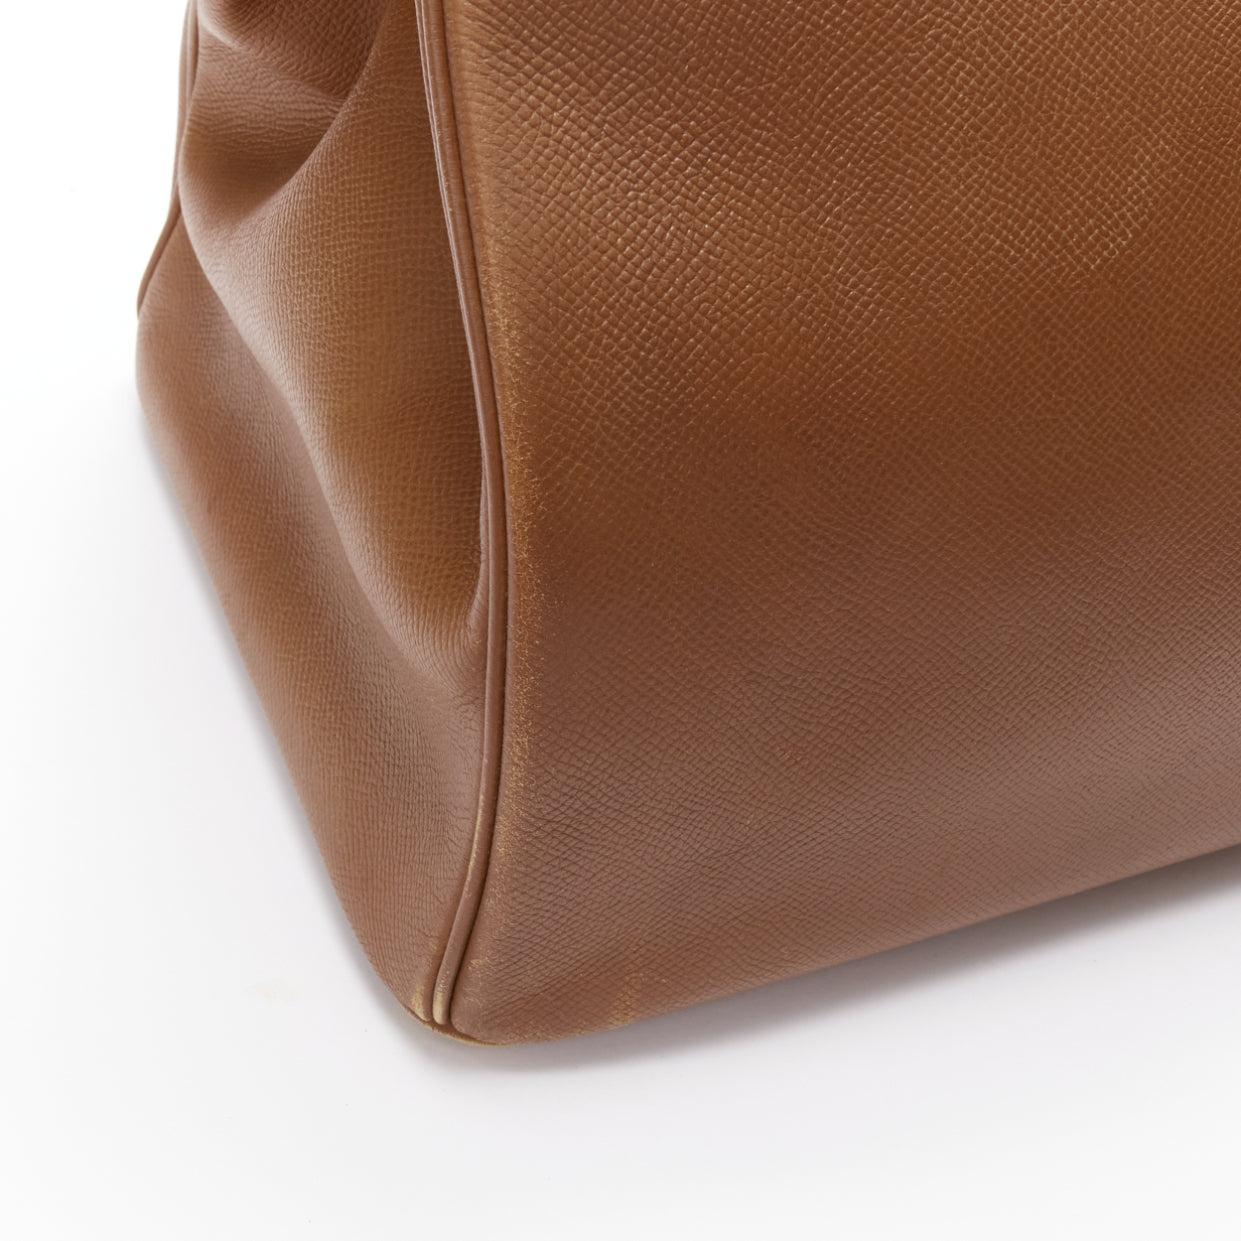 HERMES Birkin 40 Epsom brown leather gold hardware leather tote bag For Sale 4